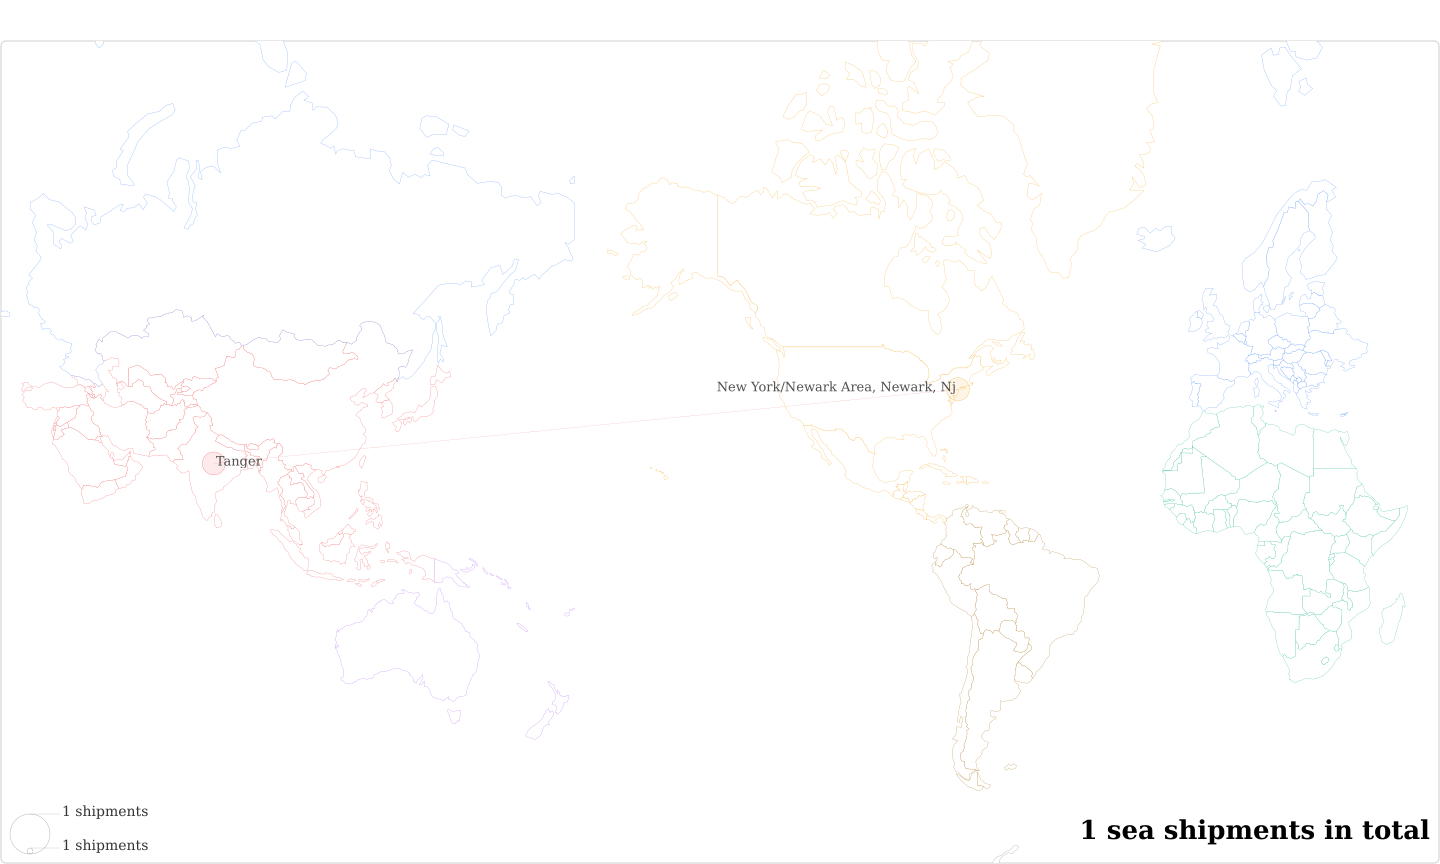 Matsu Global Logistics Limi's Imports Per Country Map